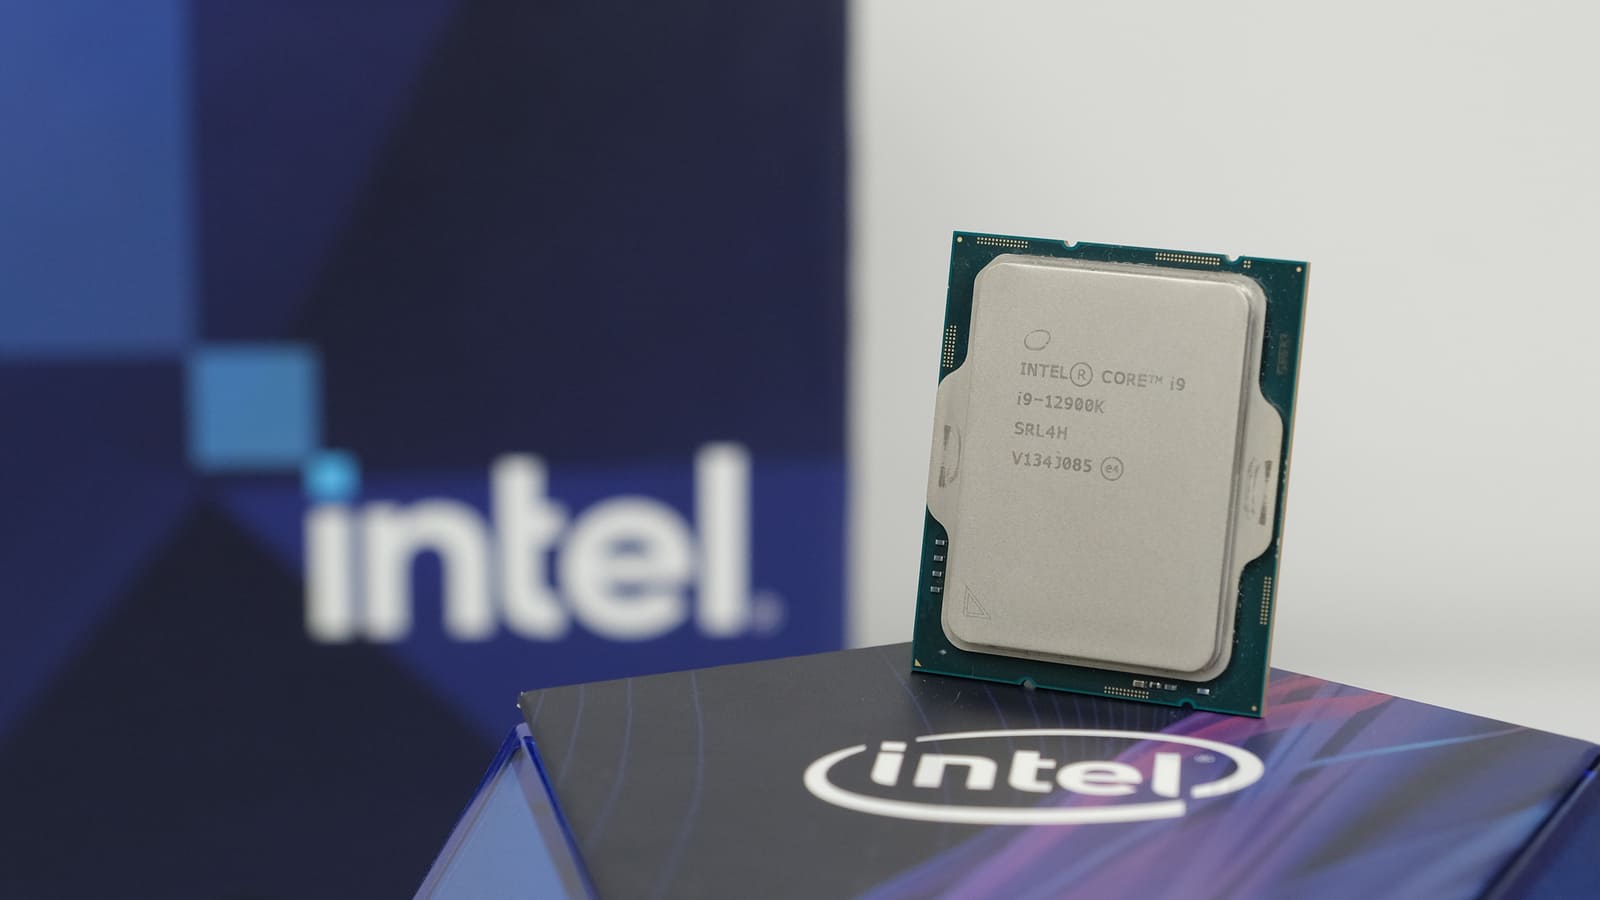 Интел k. Процессор Intel Core i9 12900k. Интел кор i9 12900к. Intel Core i9 12900k AMD Ryzen 9 5950x. Процессор Intel Core i9-12900k Box.